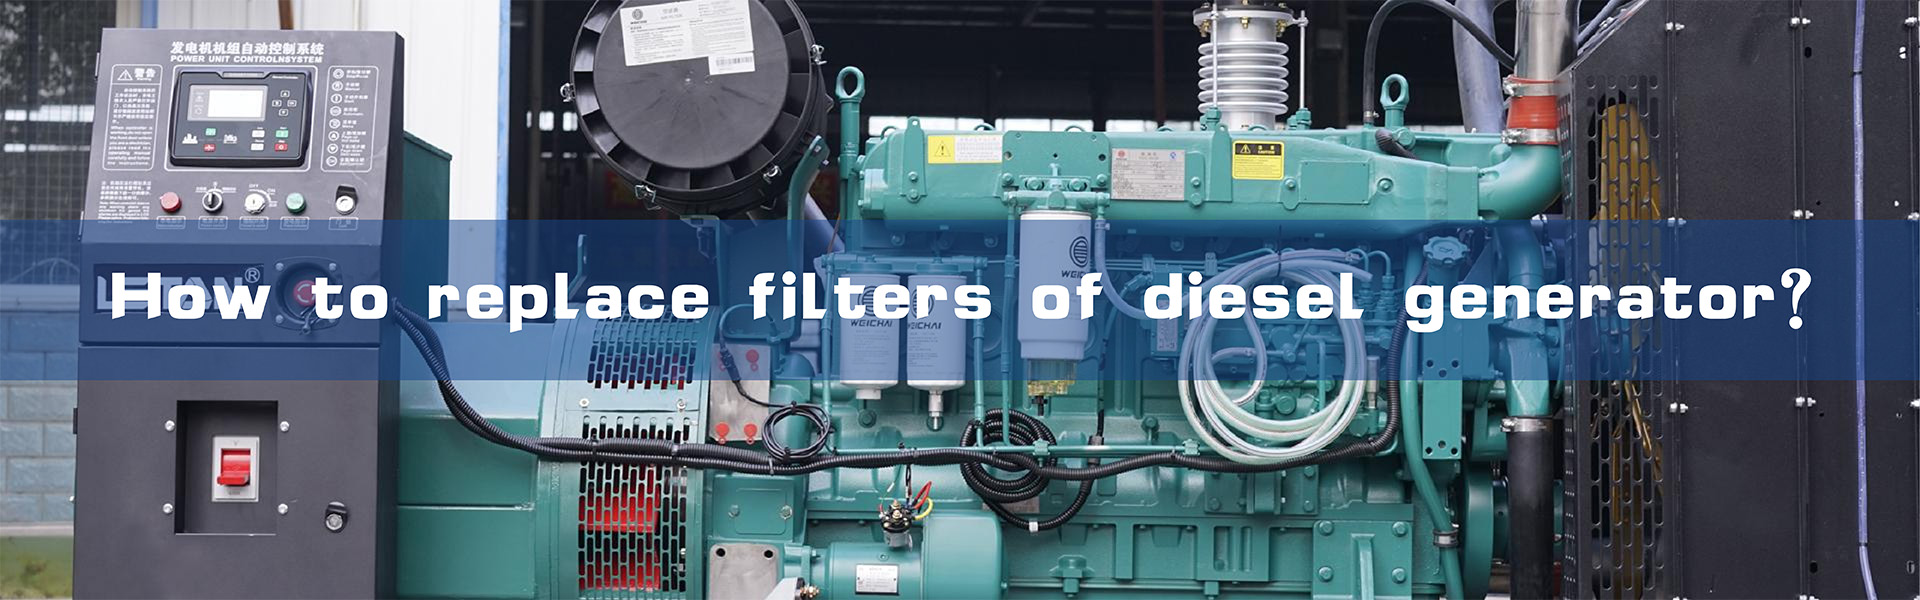 Како заменити филтерски елемент дизел генератора?